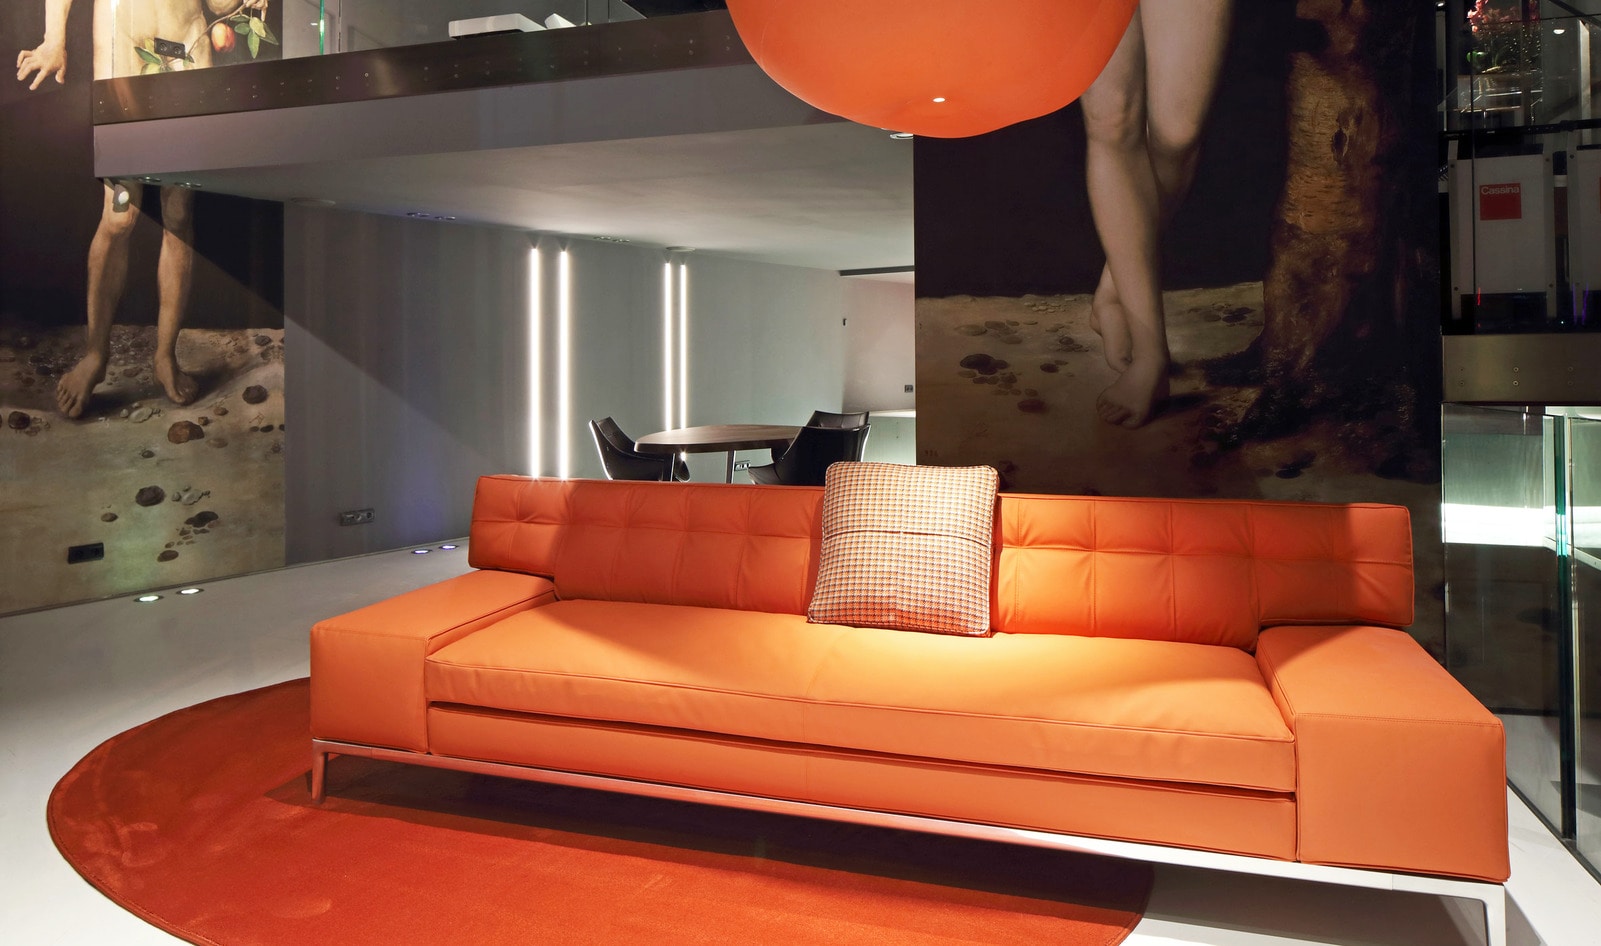 French Designer Unveils “Apeeling” Vegan Apple Leather Furniture Collection&nbsp;